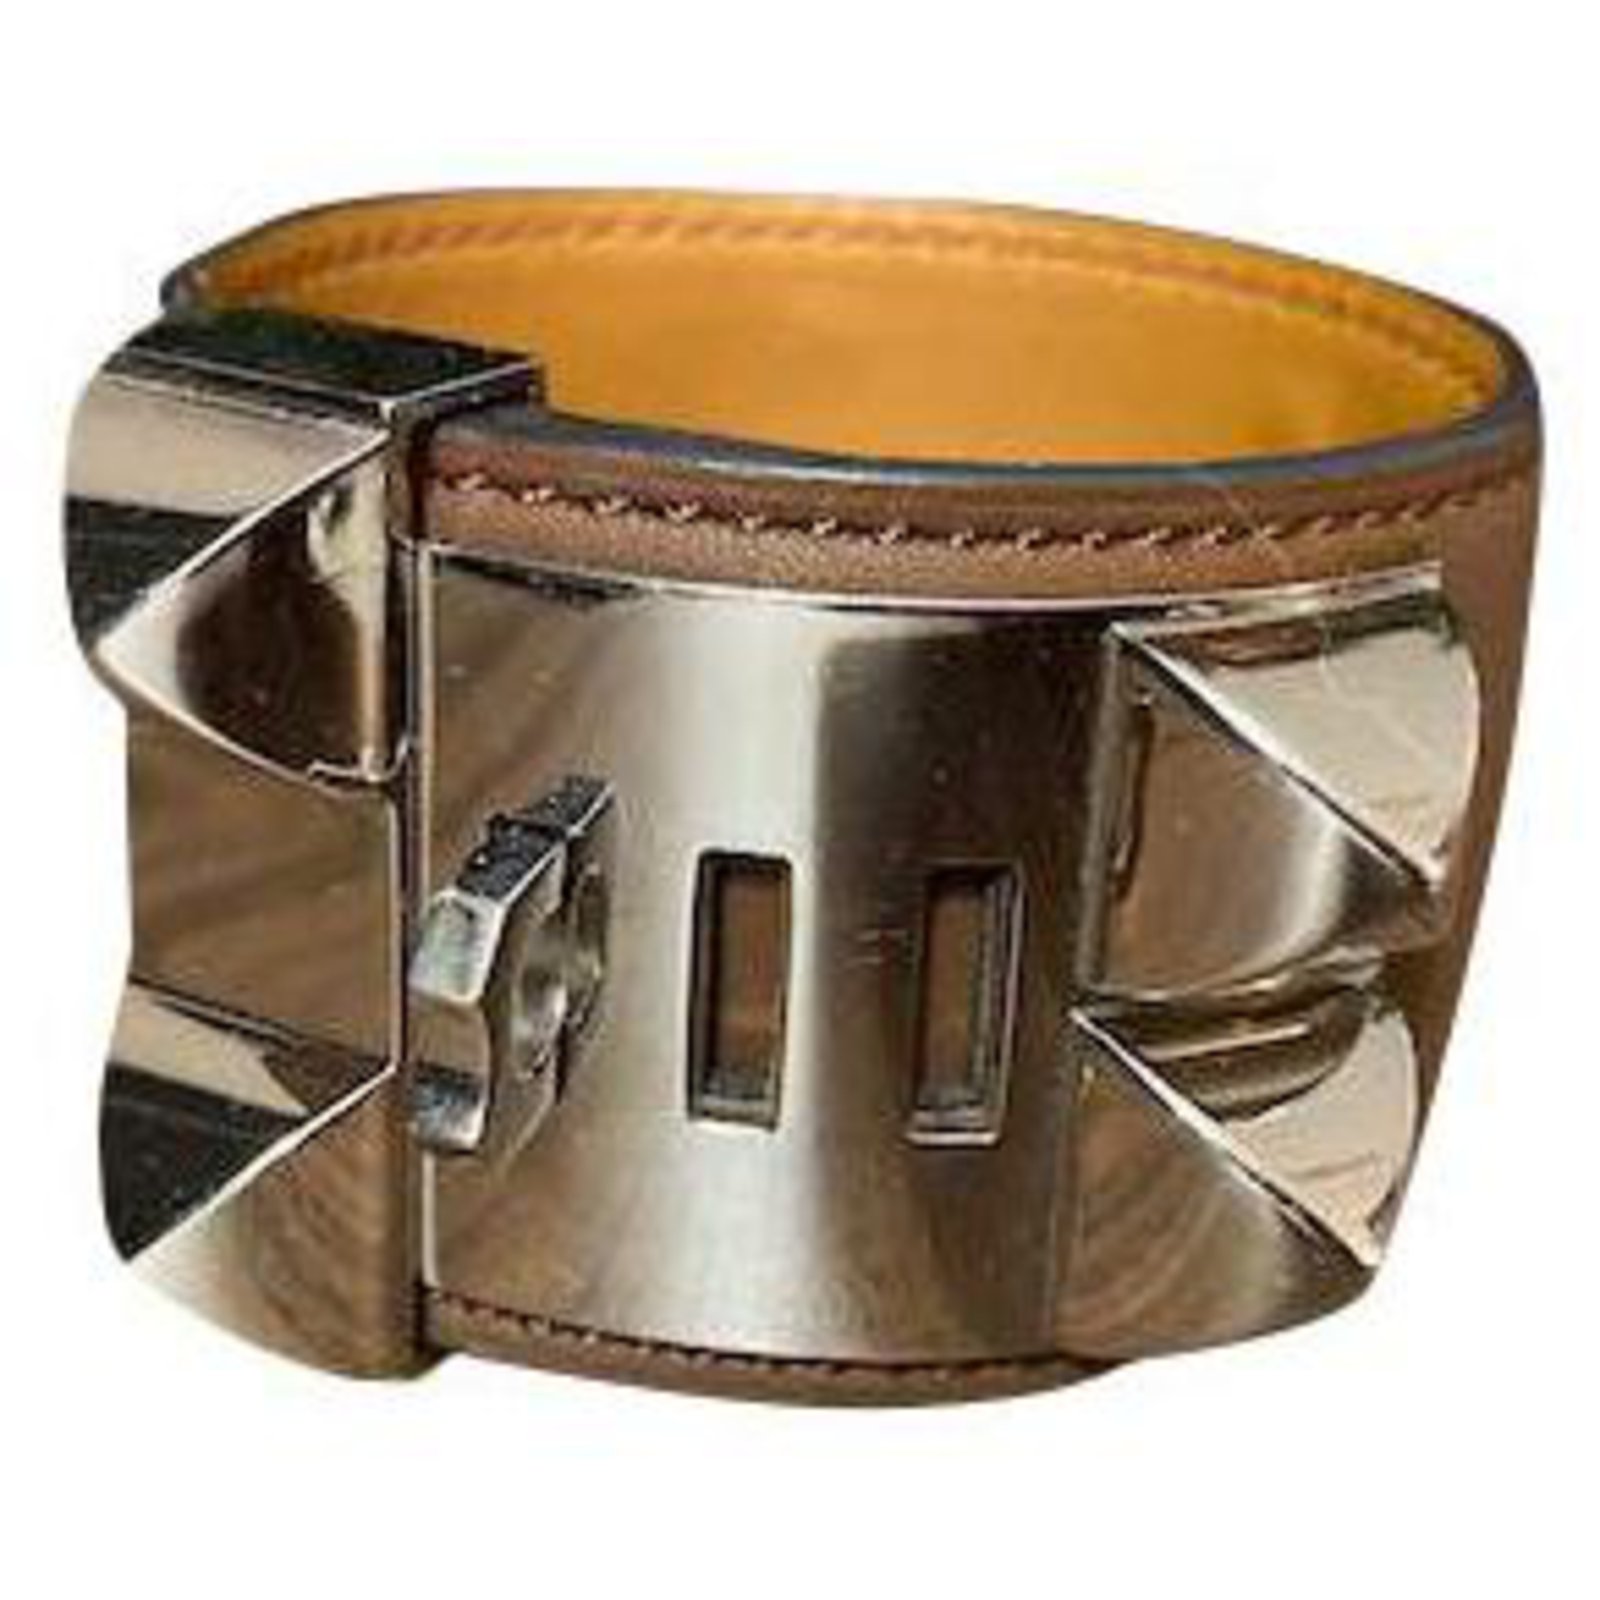 Hermes Collier de Chien Leather Gold Plated Cuff Bracelet Hermes